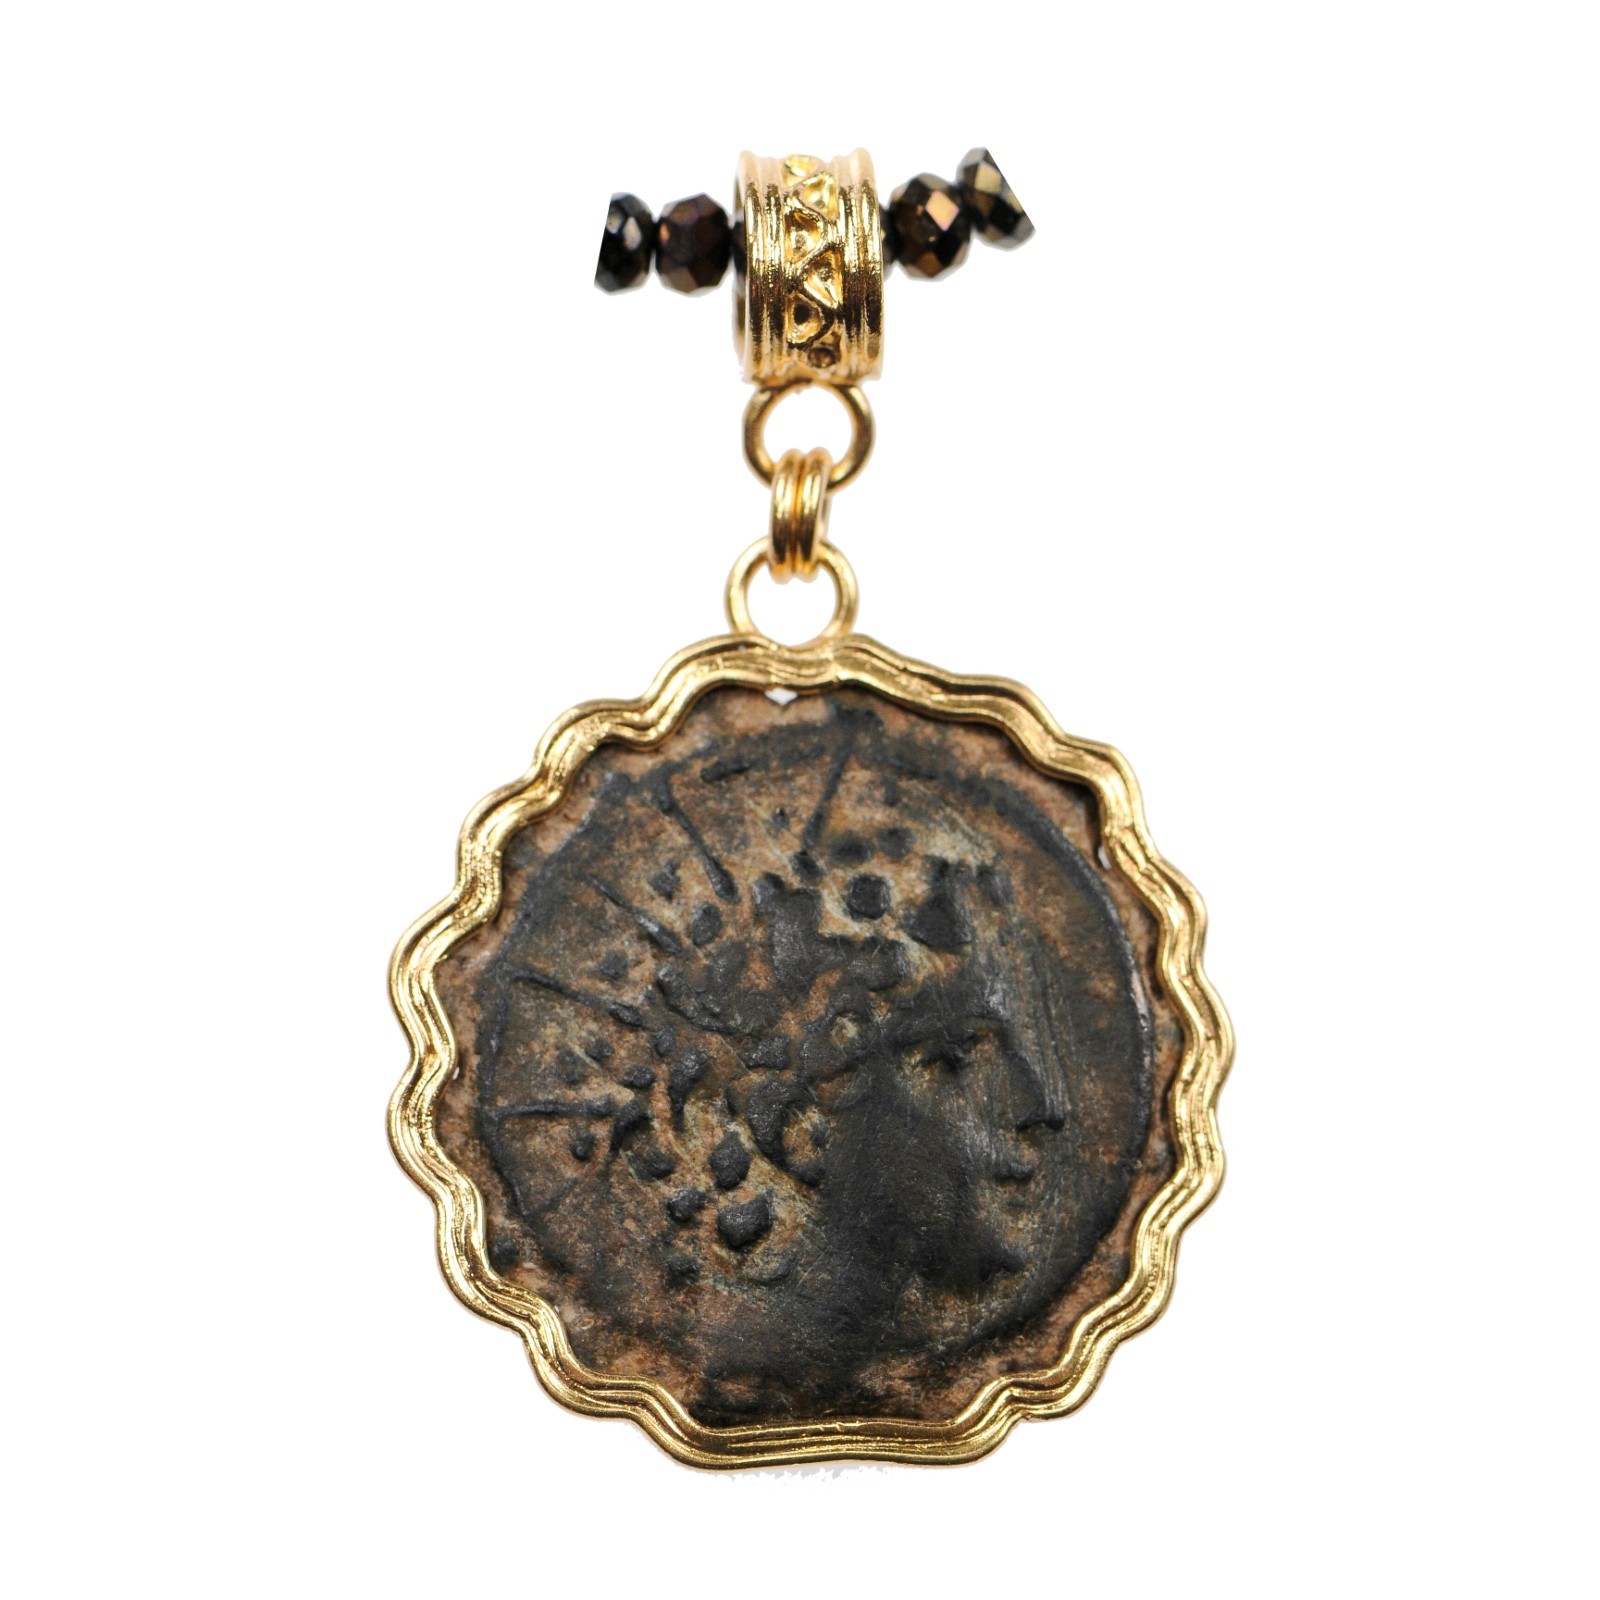 Antiochos & Elephant Coin in 21 kt Pendant